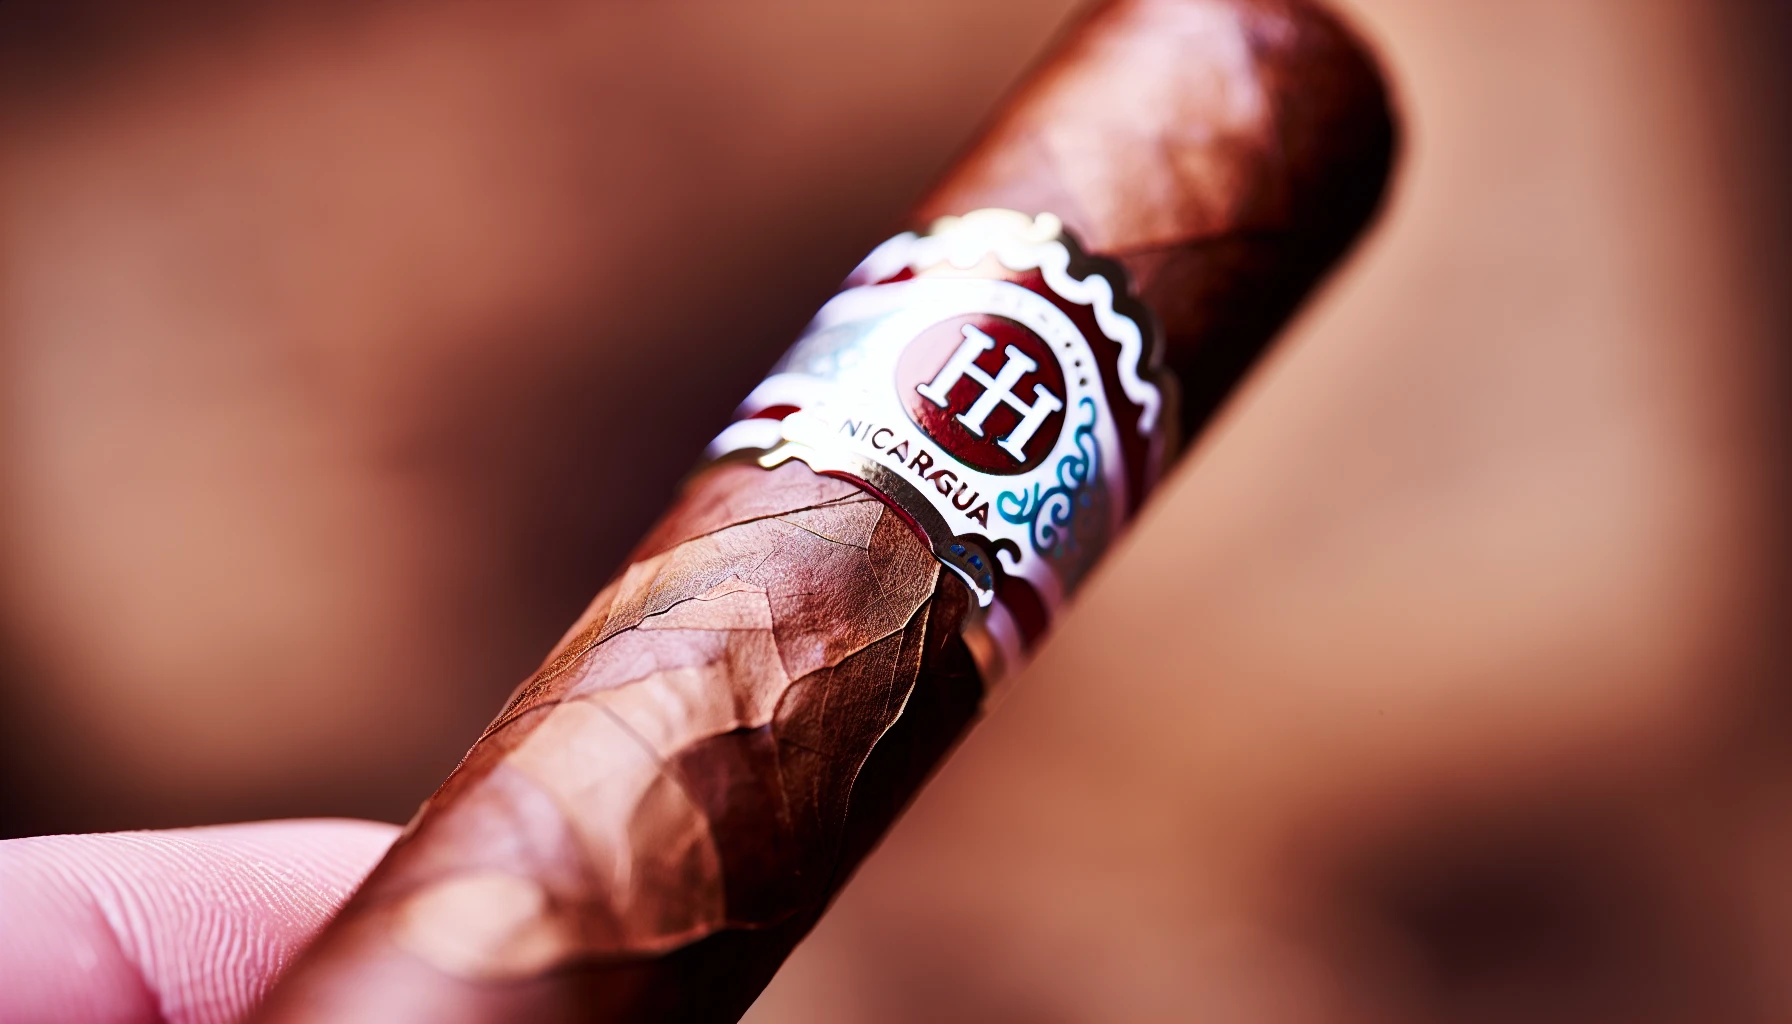 H Upmann Nicaragua Heritage cigar